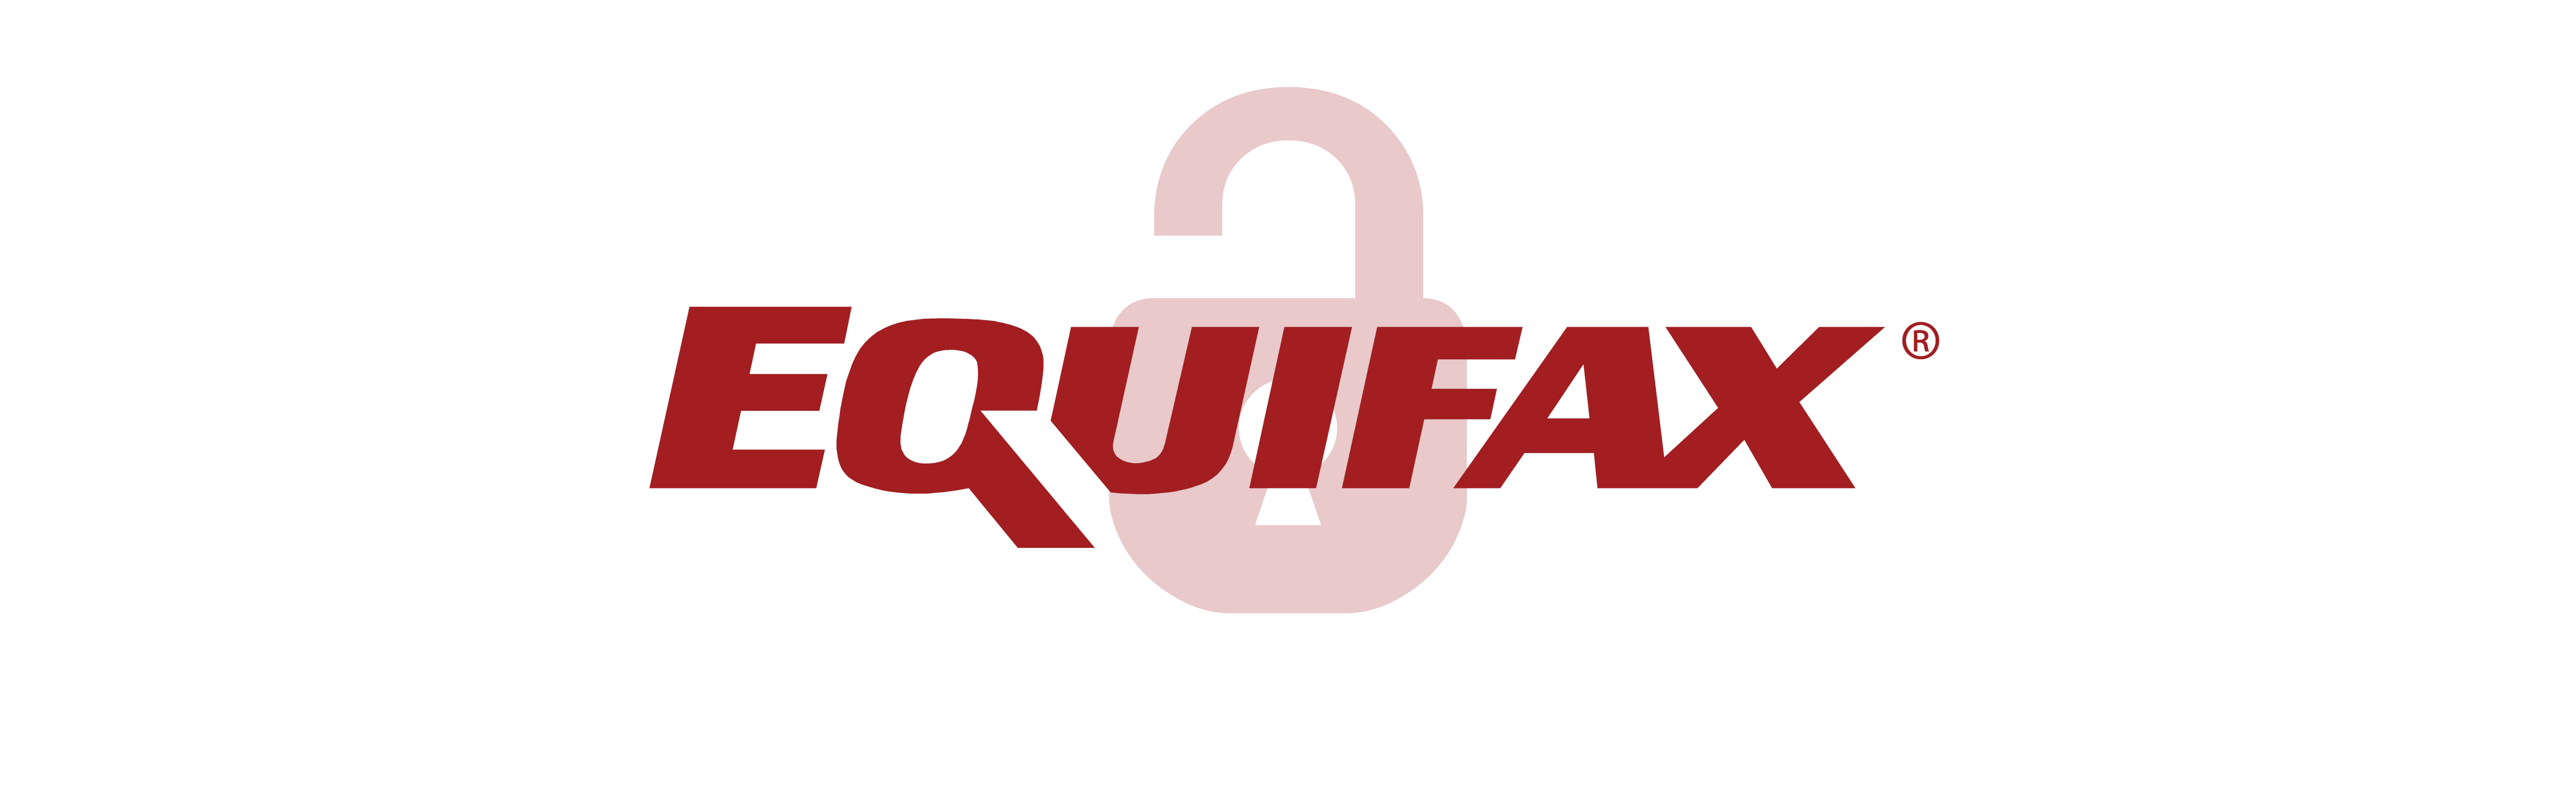 Equifax Opt 2 Header image